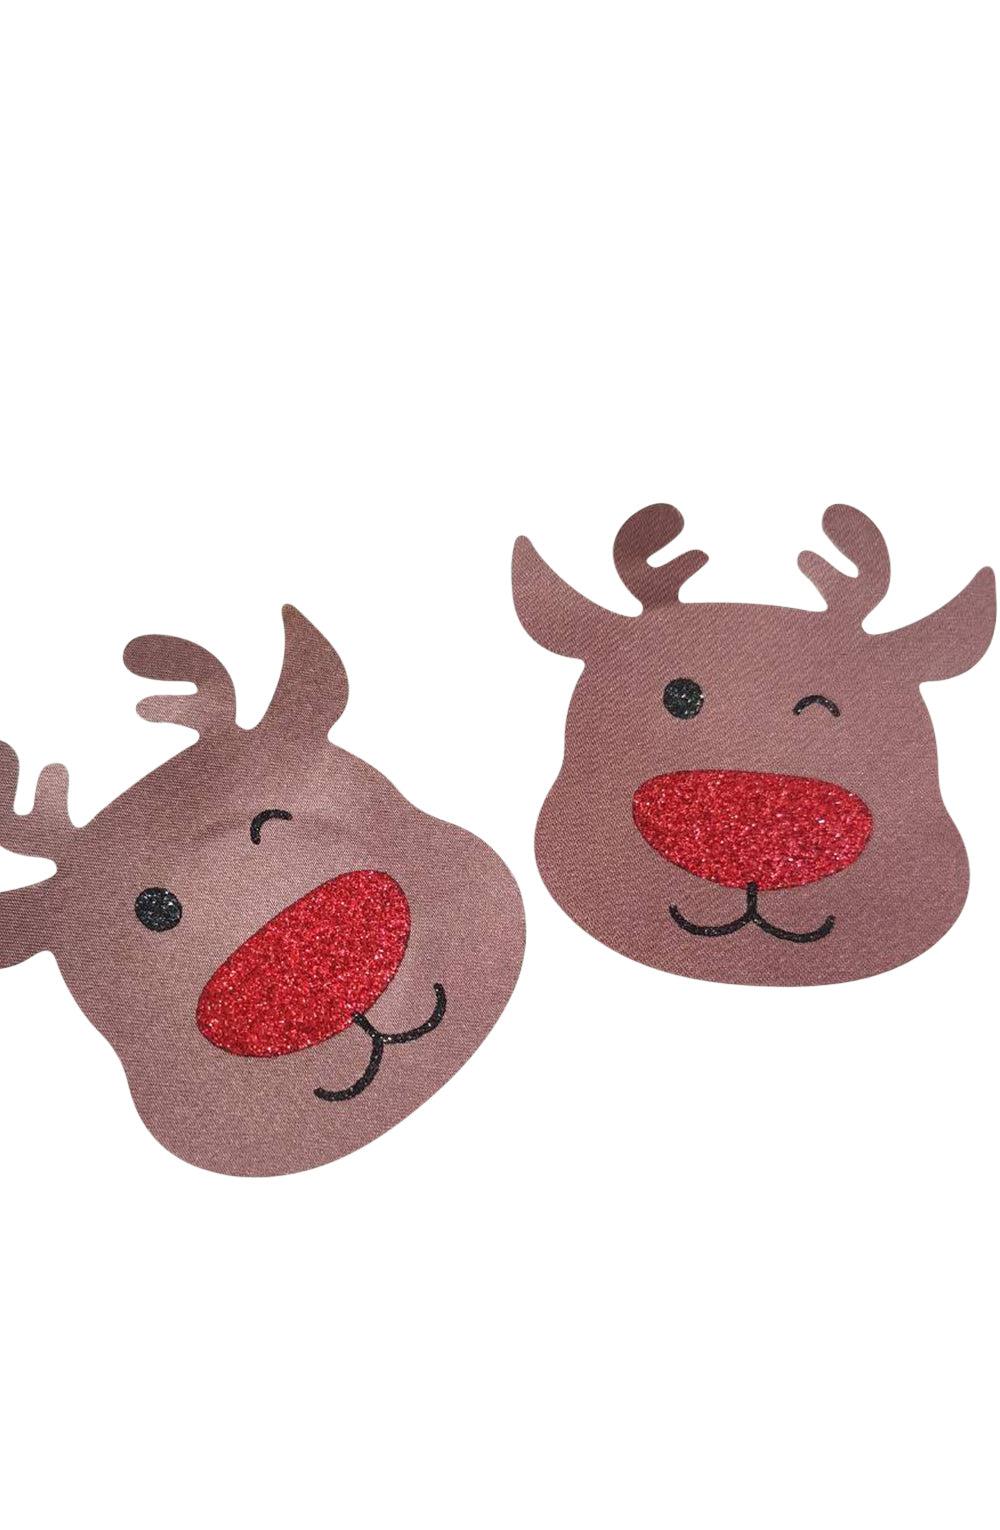 Yesx Yx960 Brown/Red Reindeer Nipple Covers-Katys Boutique